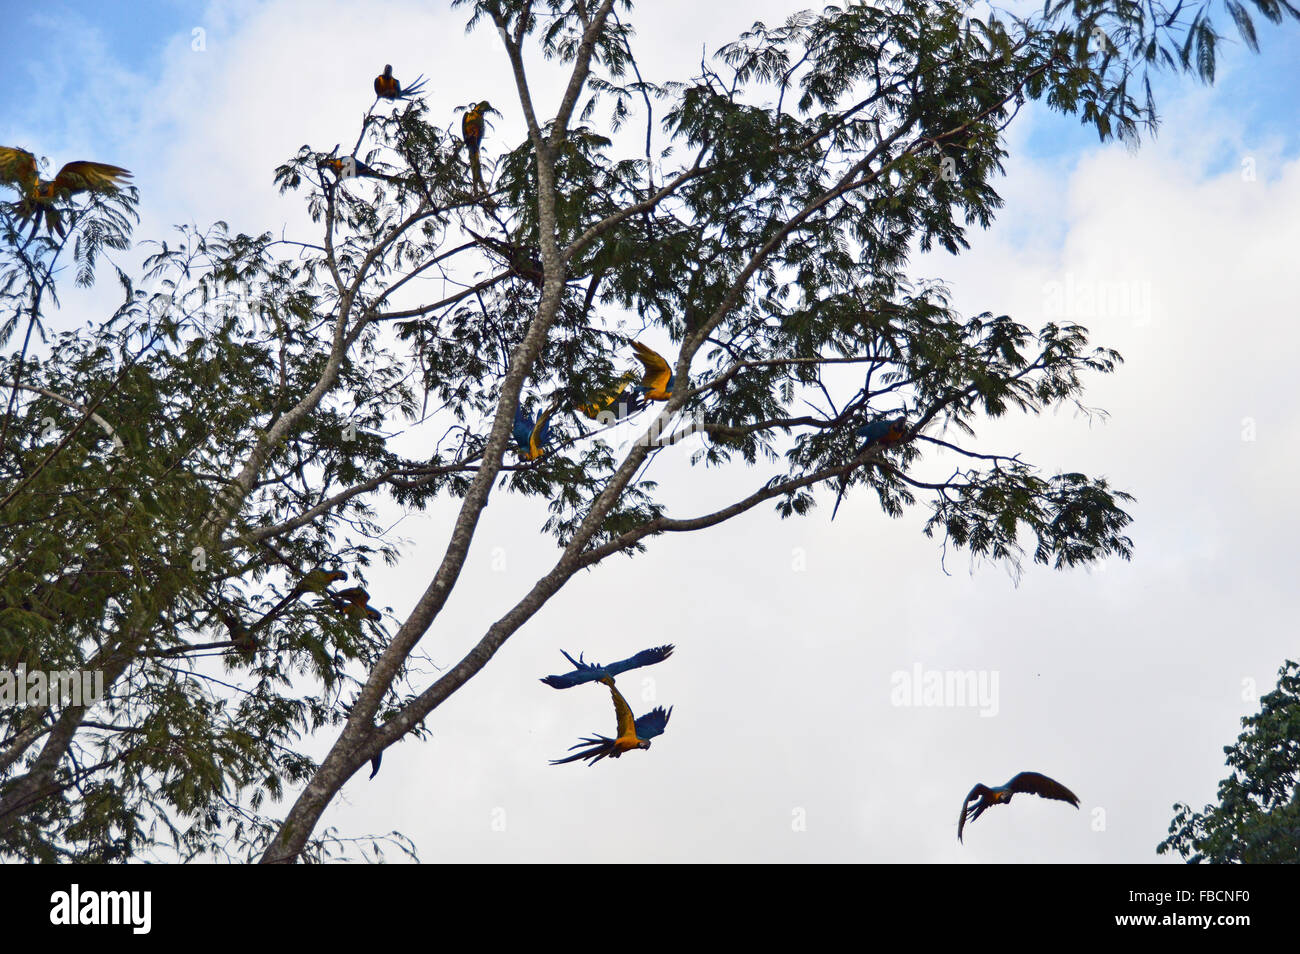 Araras canindé, Blue and yellow macaws flying, Chapada dos veadeiros, Brazil Stock Photo